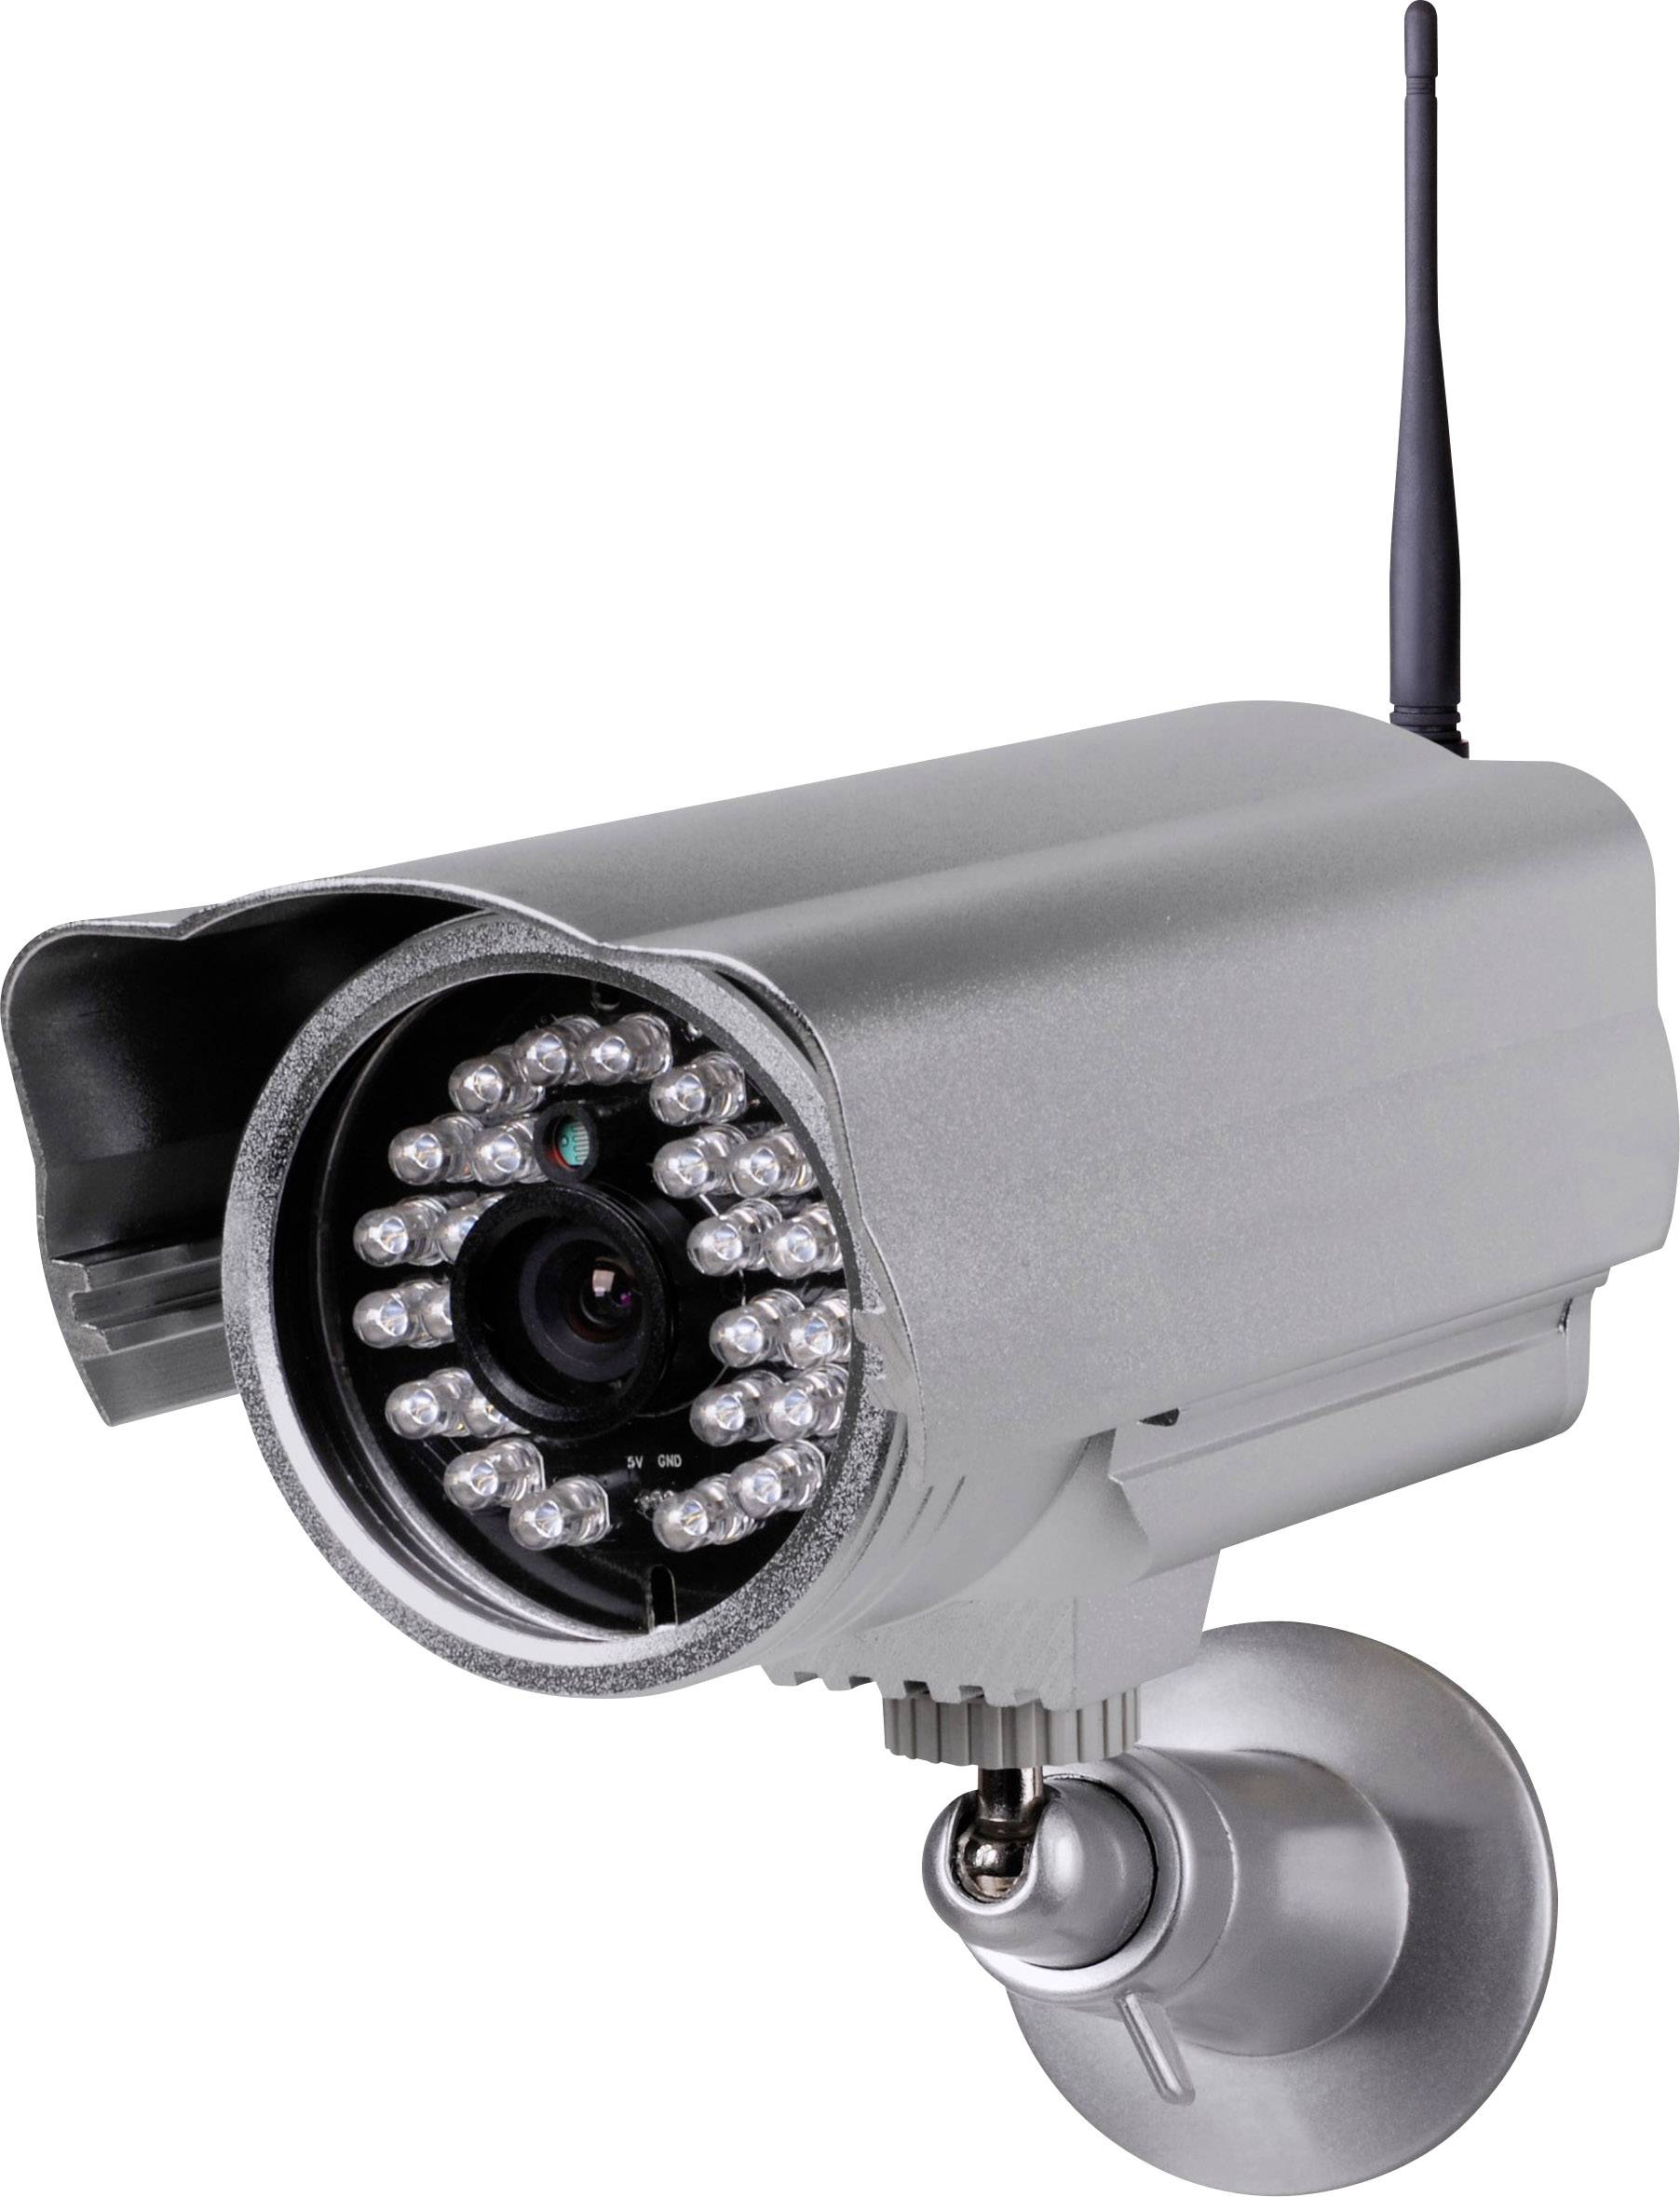 2 SW Wi-Fi IP CCTV camera 640 x 480 p 